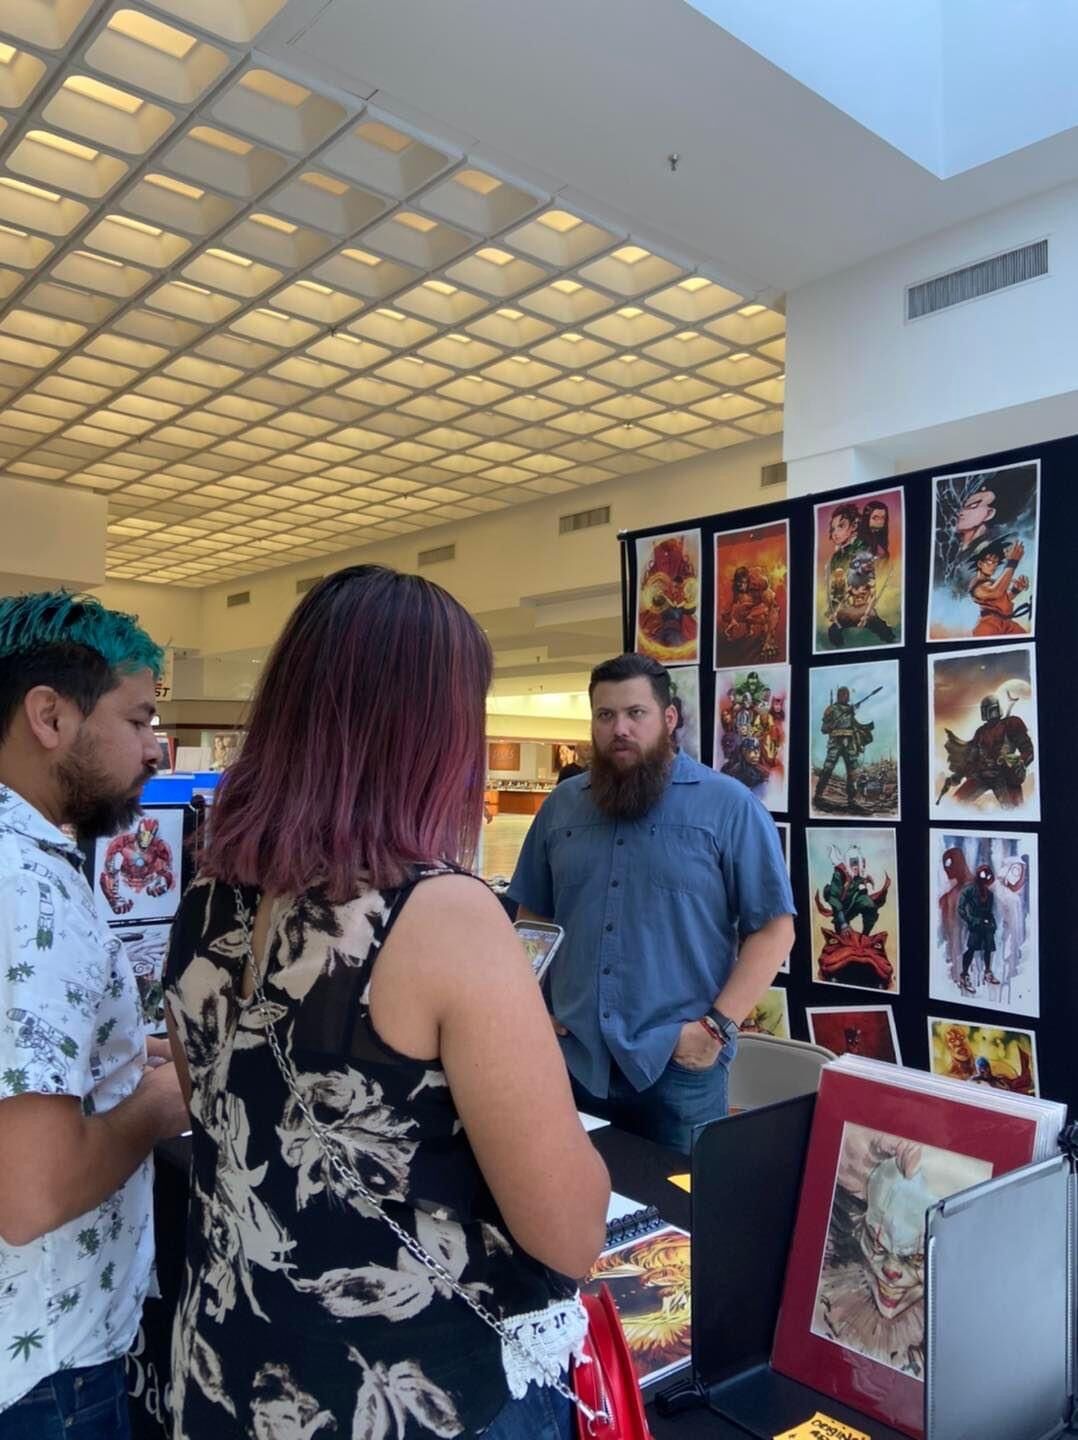 El Pasoans Invited To Chicho's 2nd Anime Fest Inside Bassett Mall